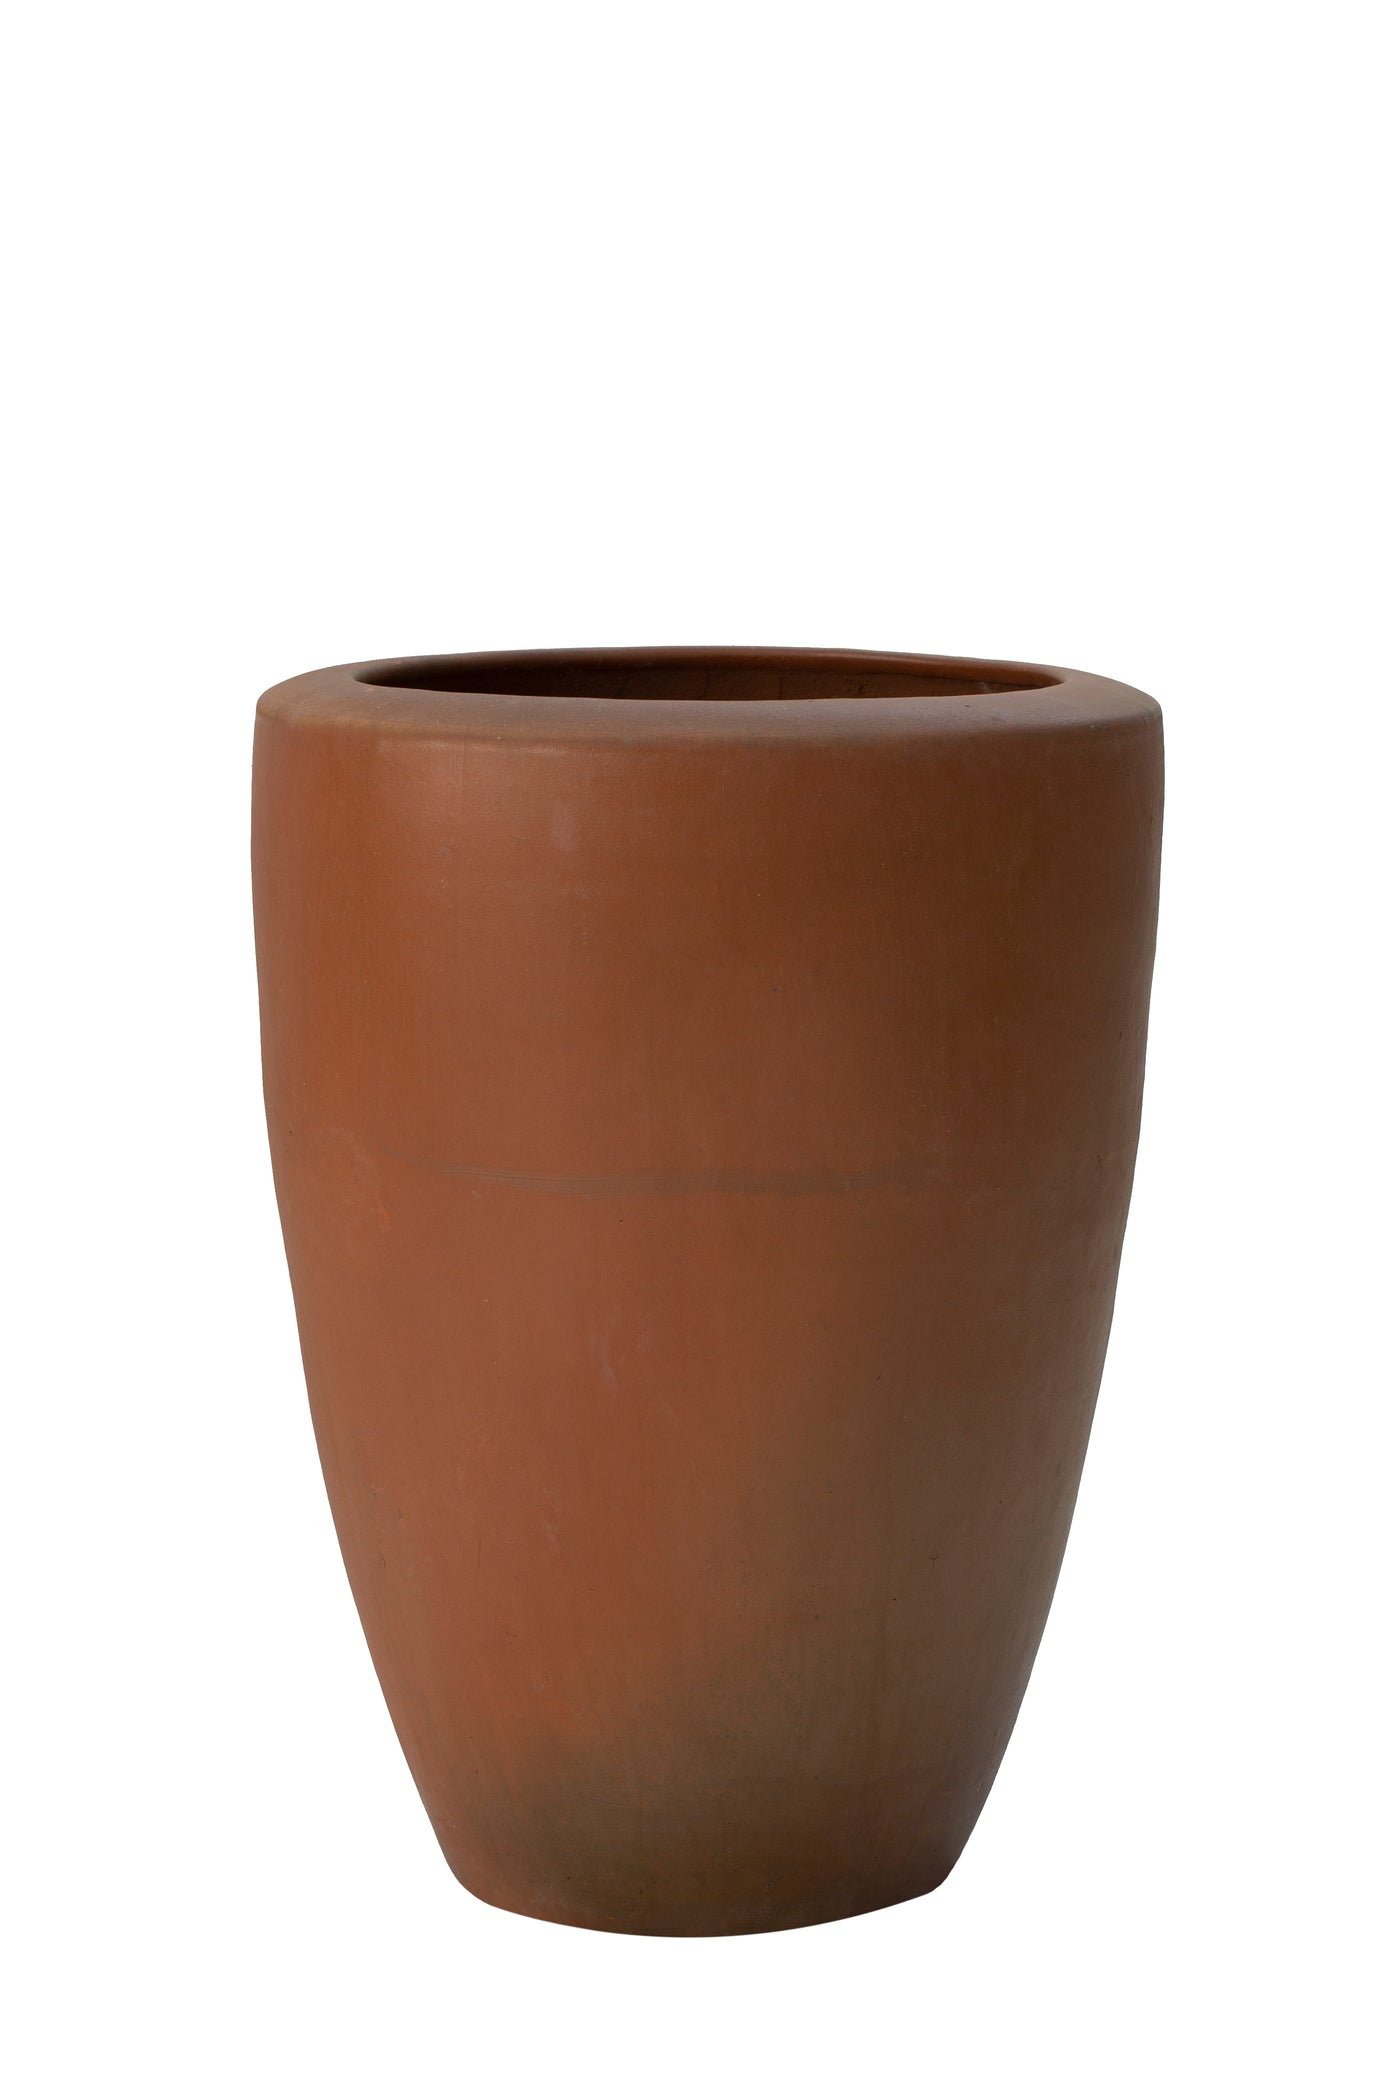 Ghiveci ceramic De luxe Partner 55x75 cm teracota